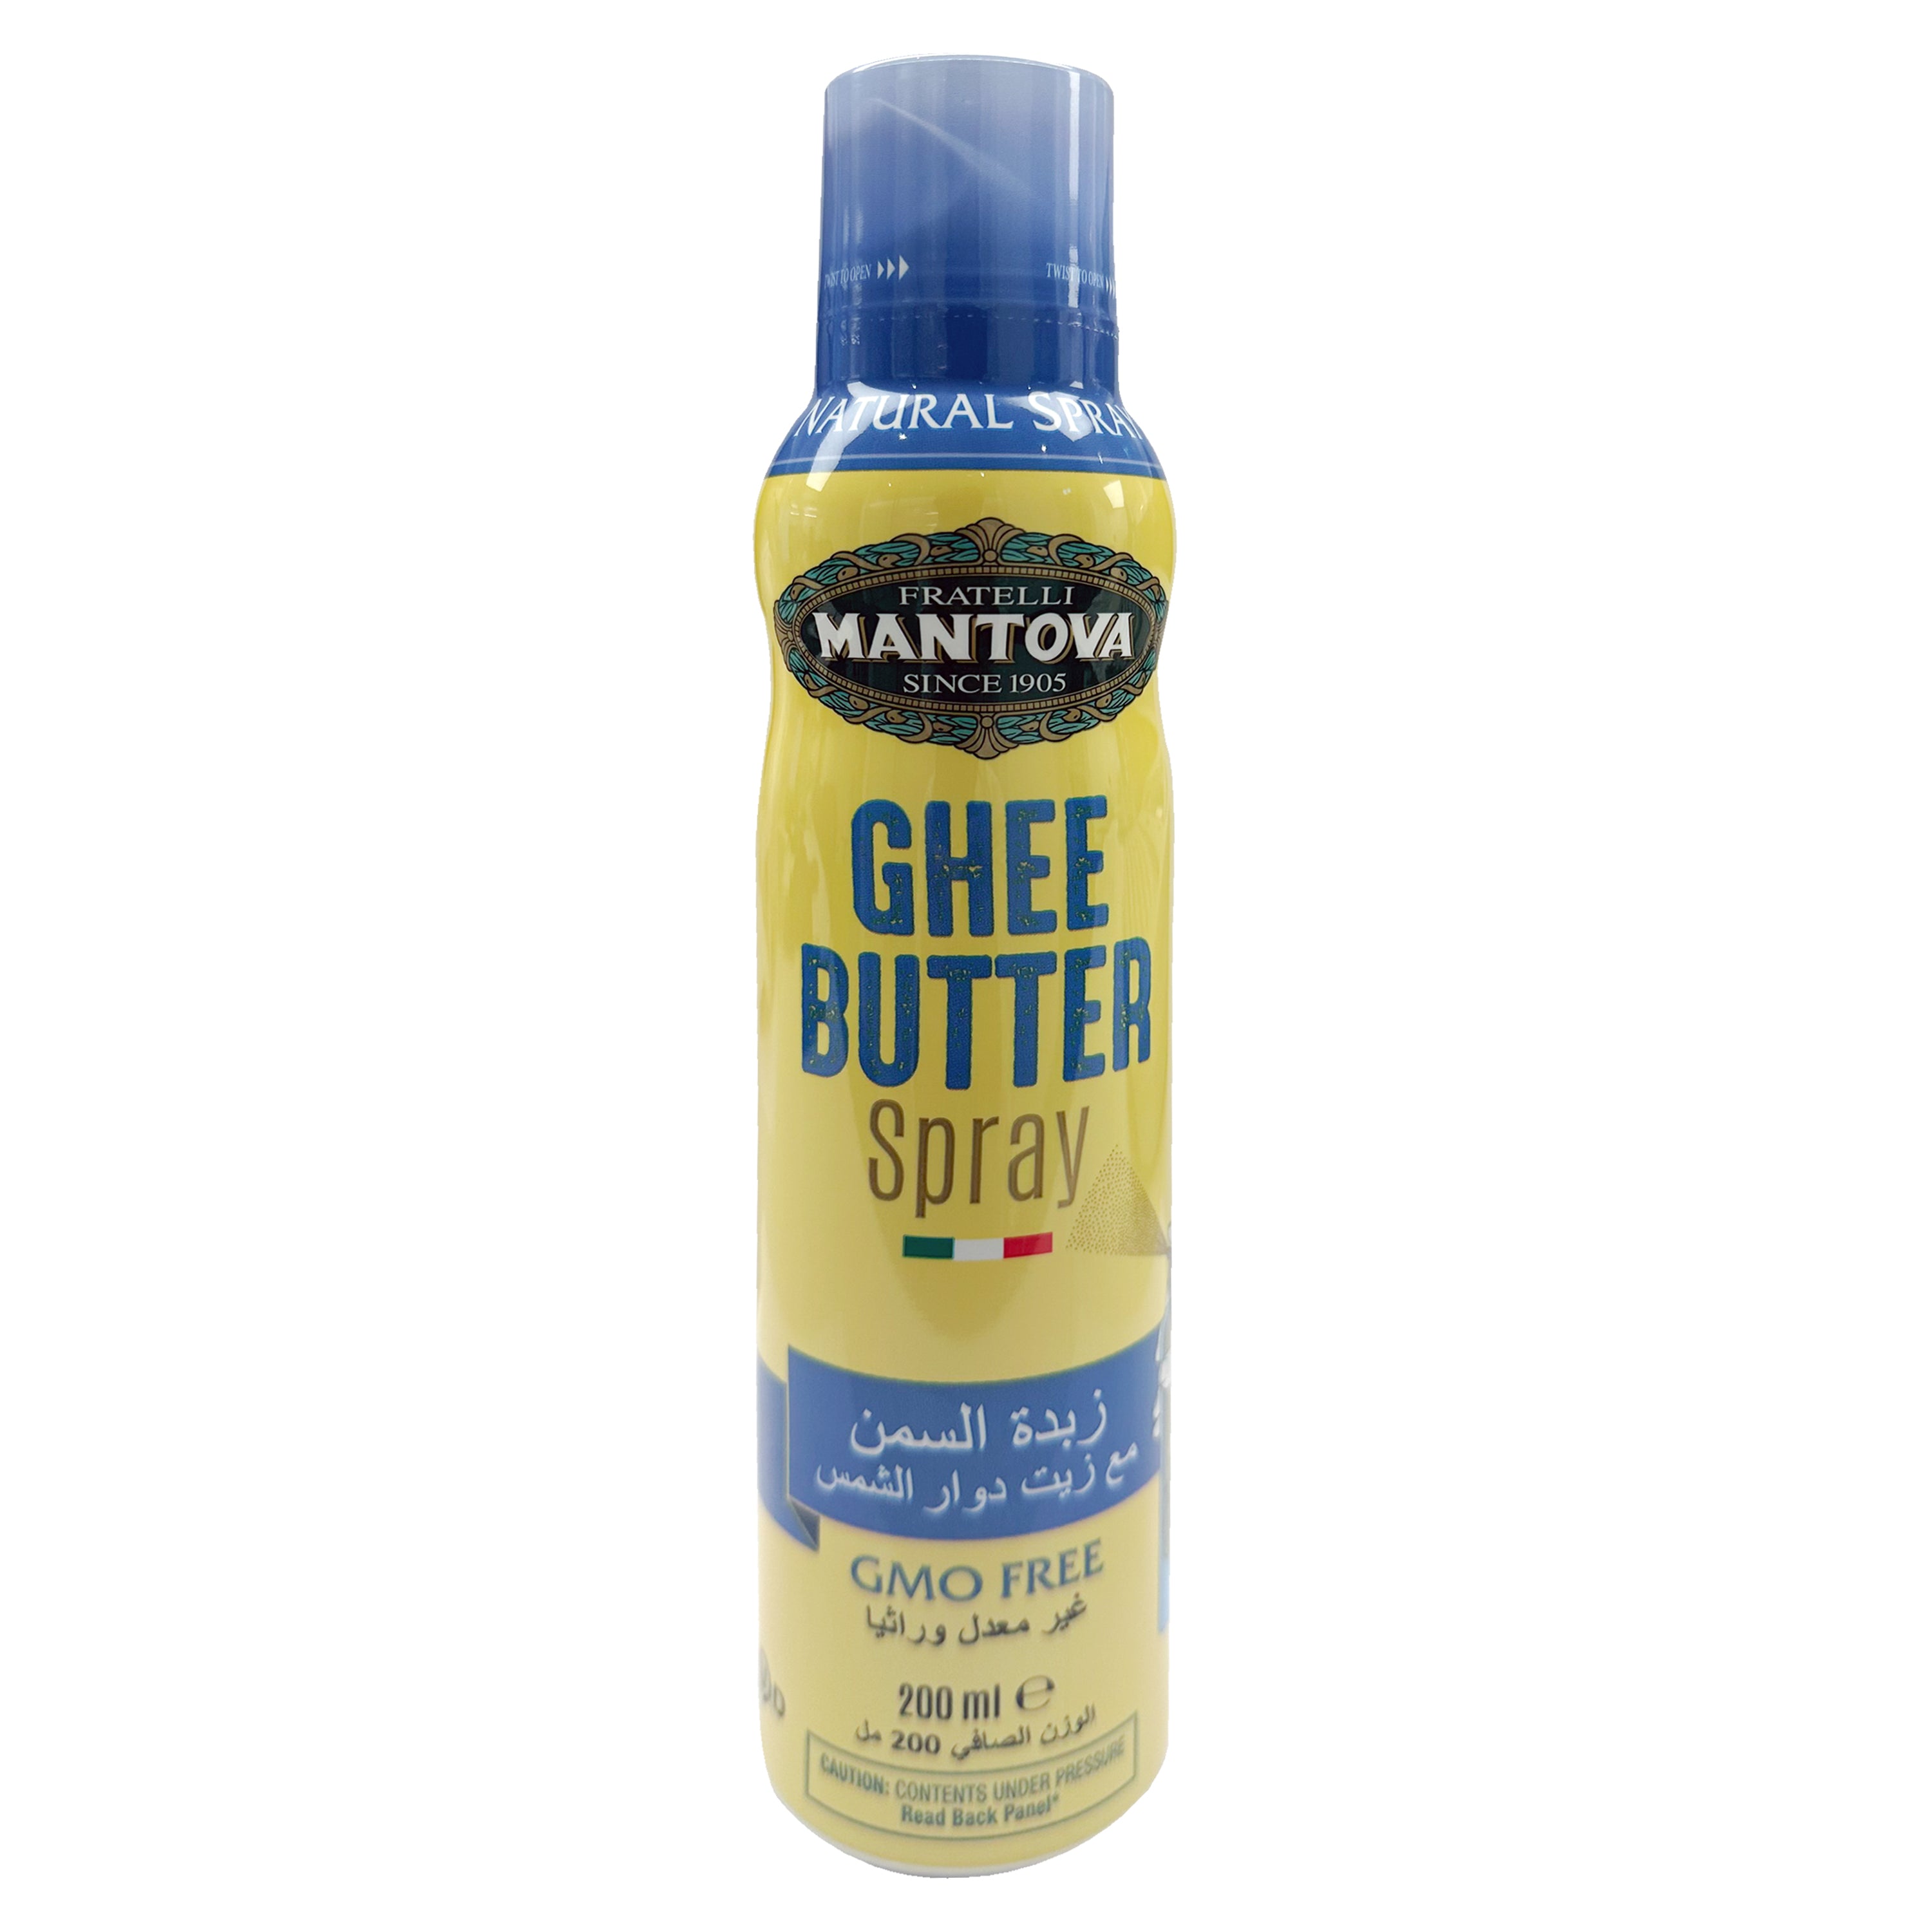 MANTOVA Non-GMO Ghee Butter Spray, 200ml, Non GMO, Lactose-free